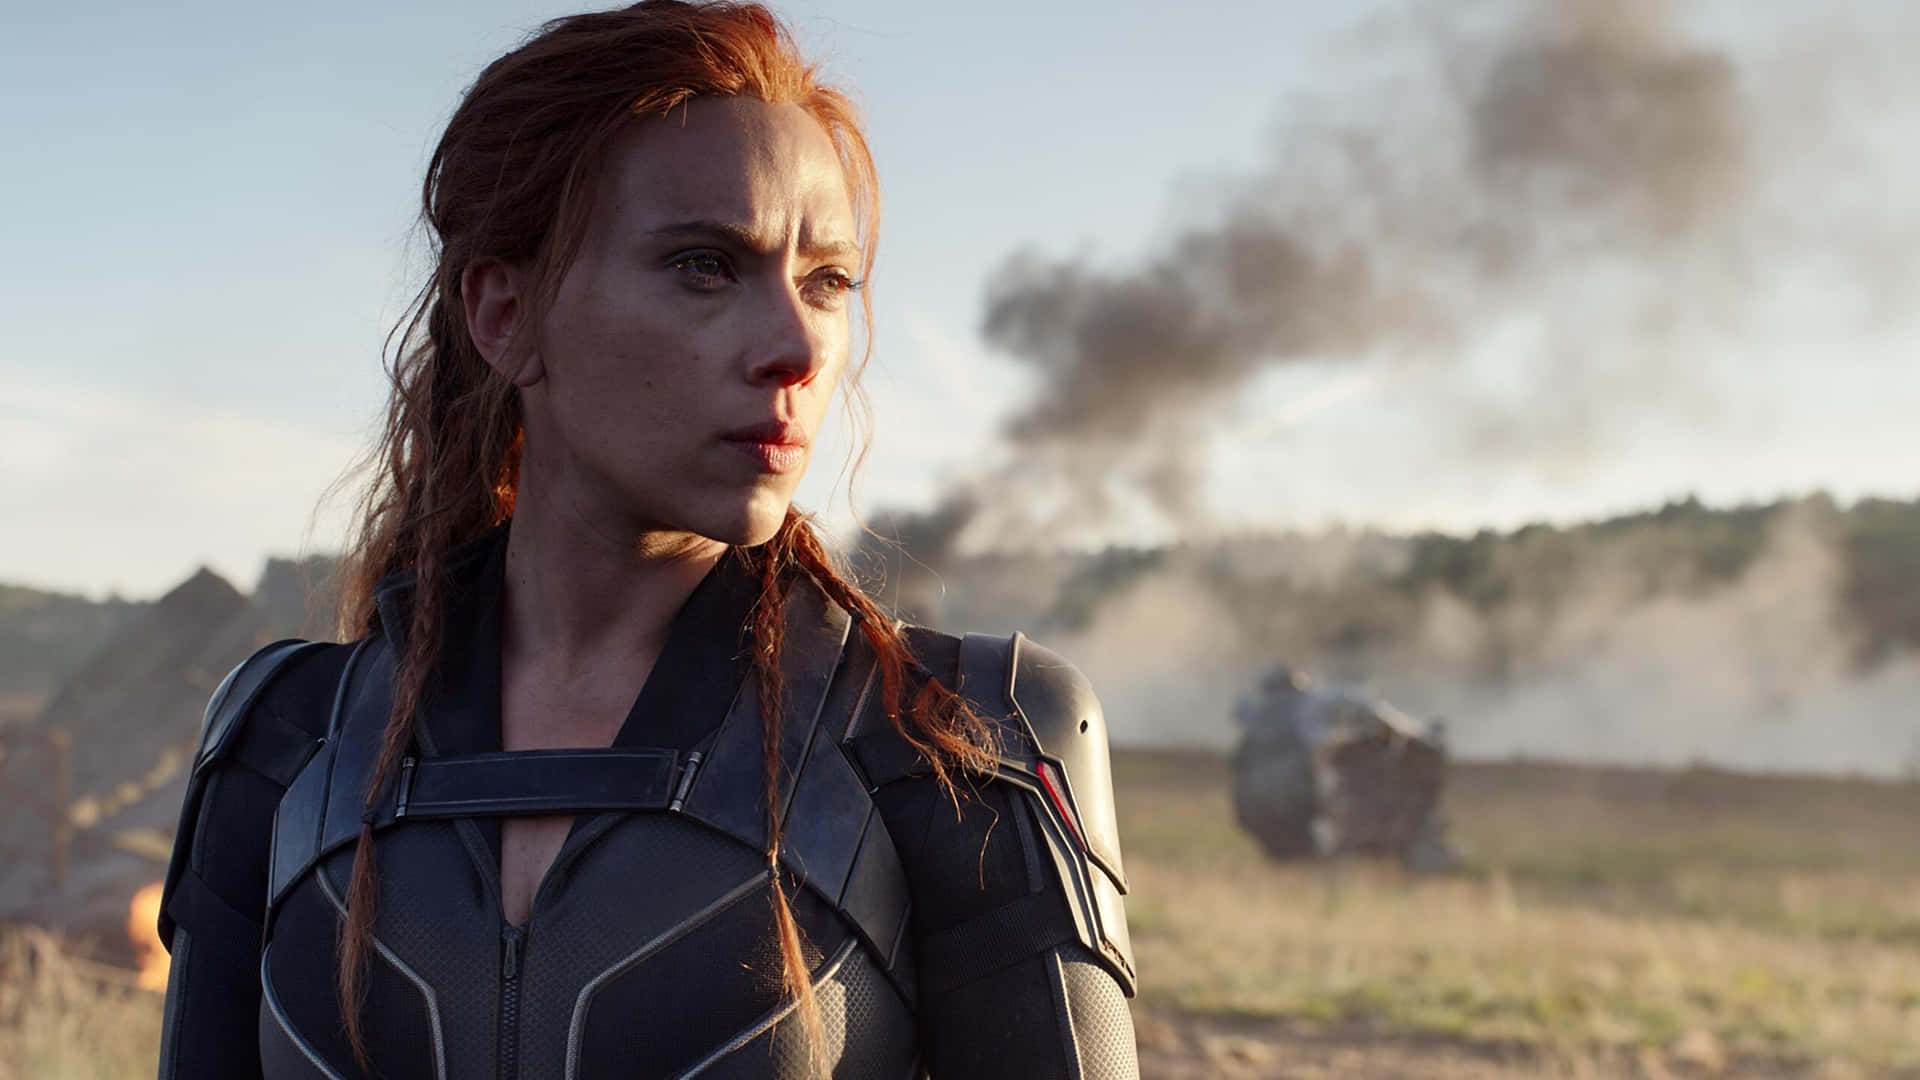 Scarlett Johansson as the iconic Marvel superhero Black Widow